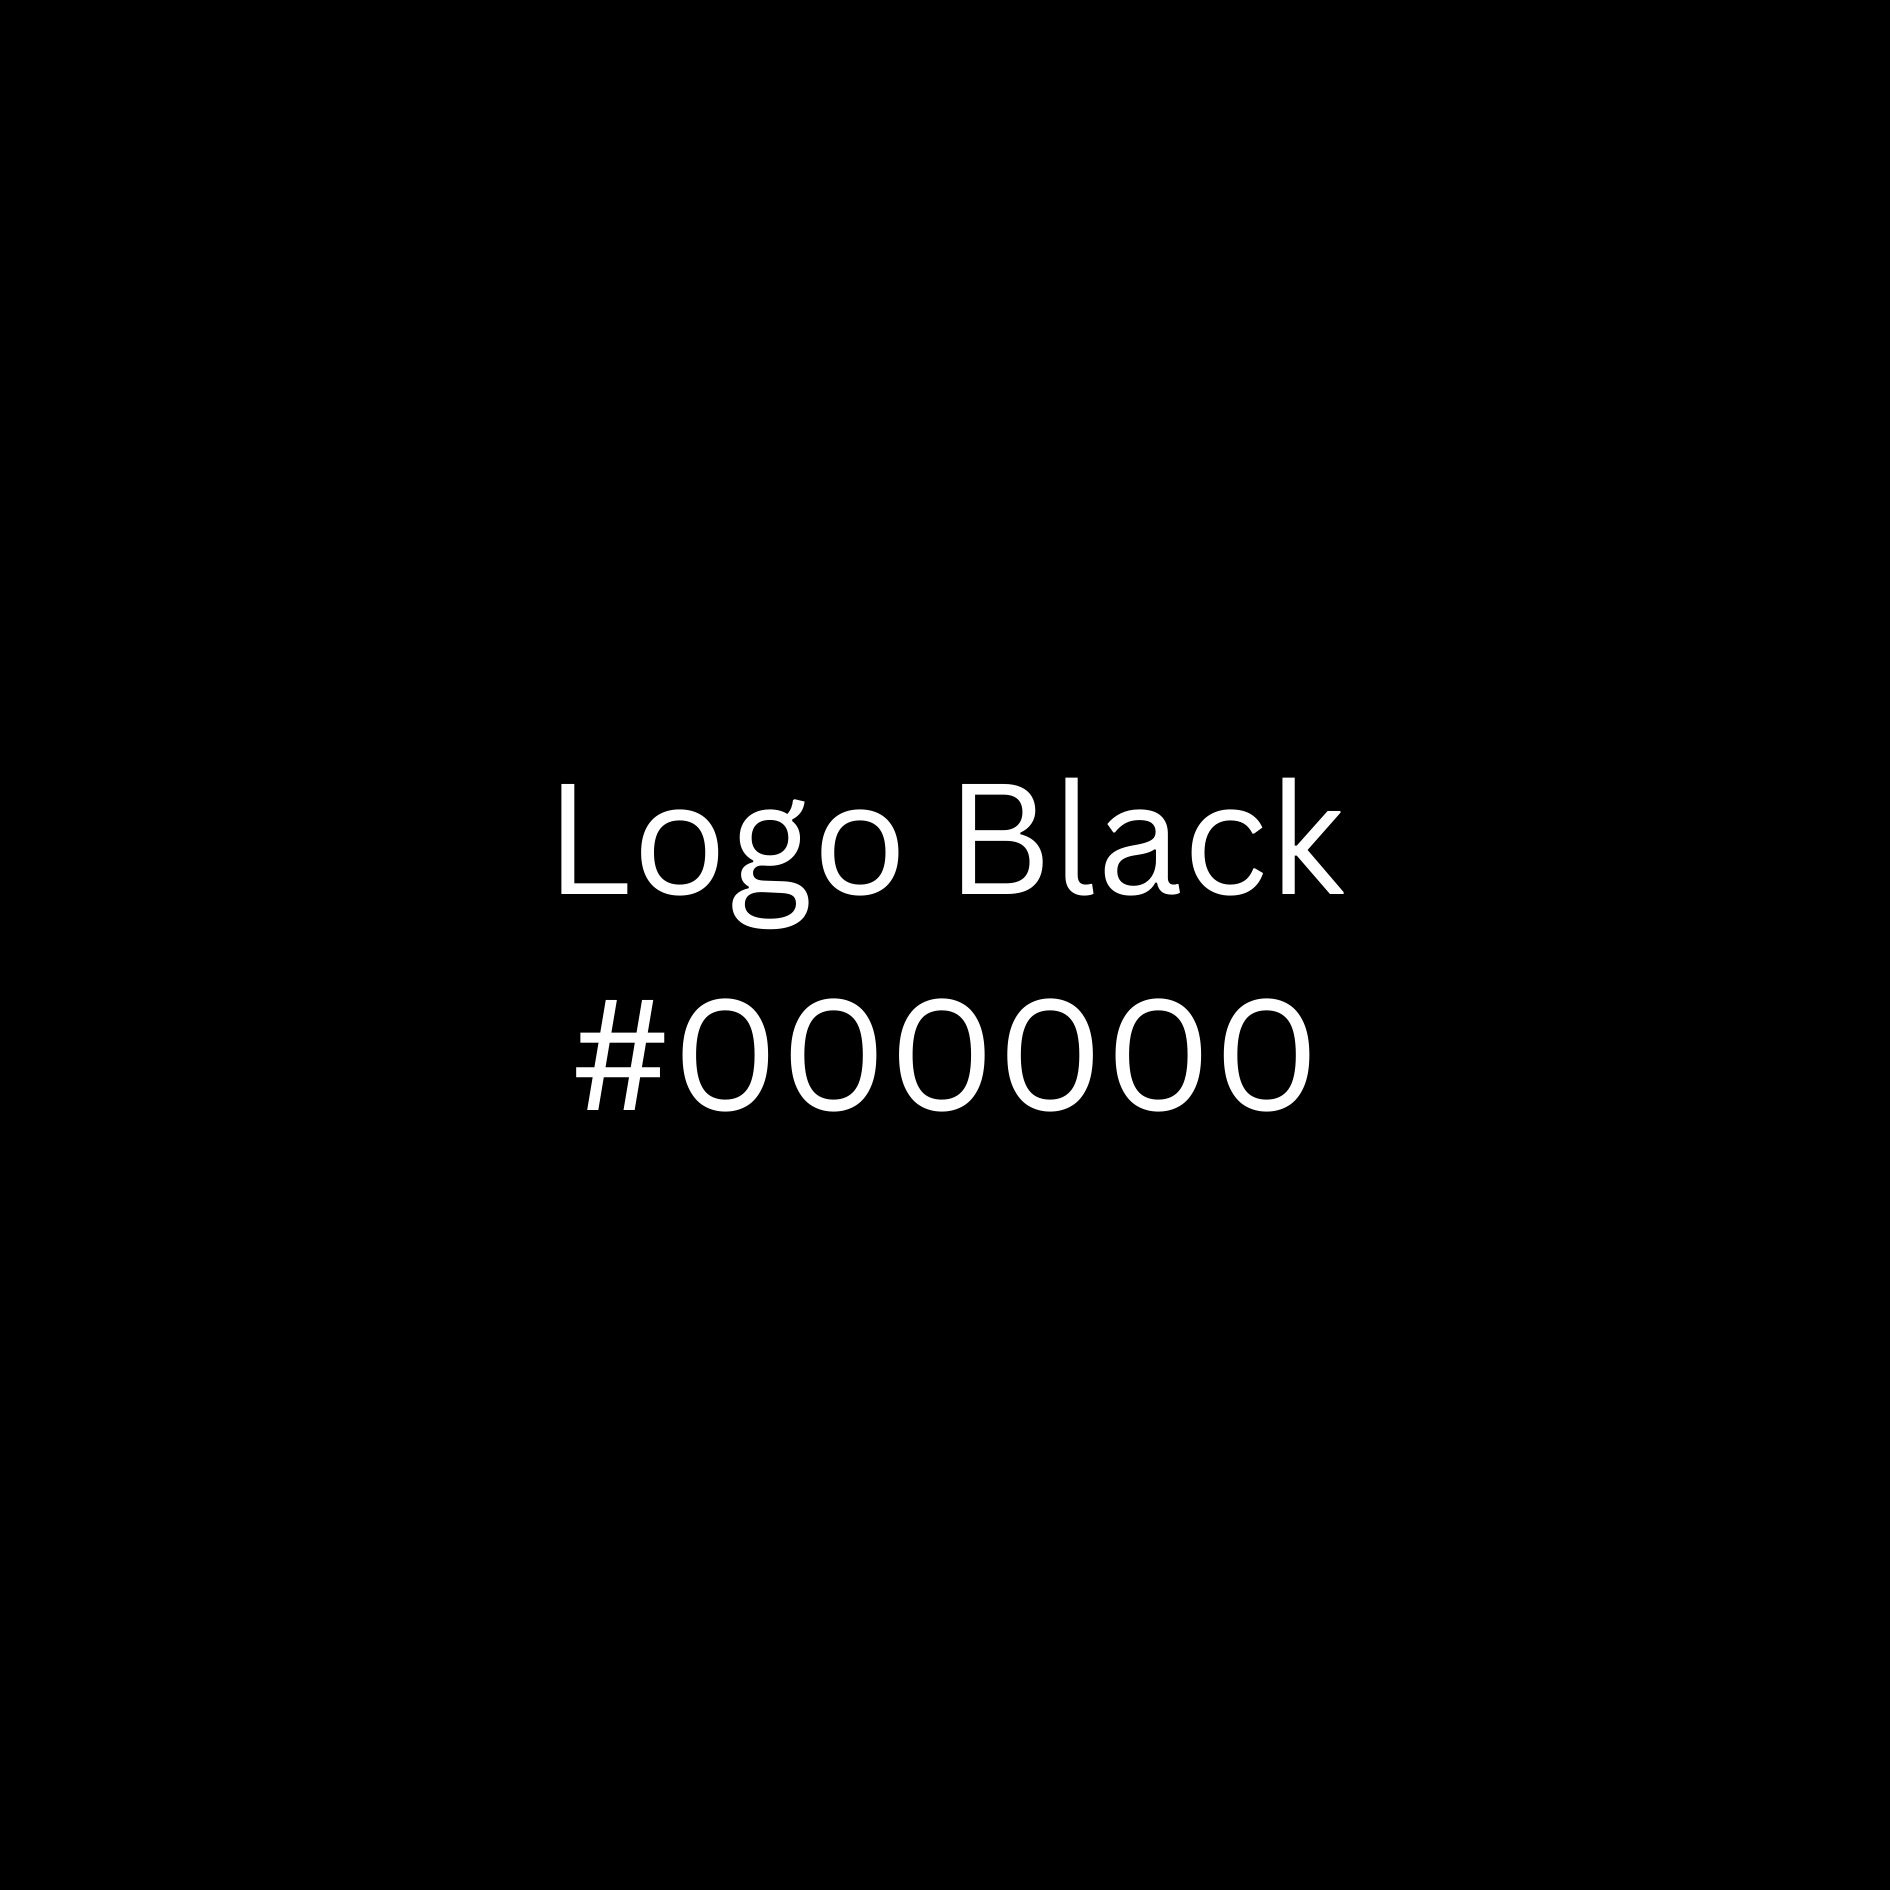 Black Used Throughout Website & In Logo